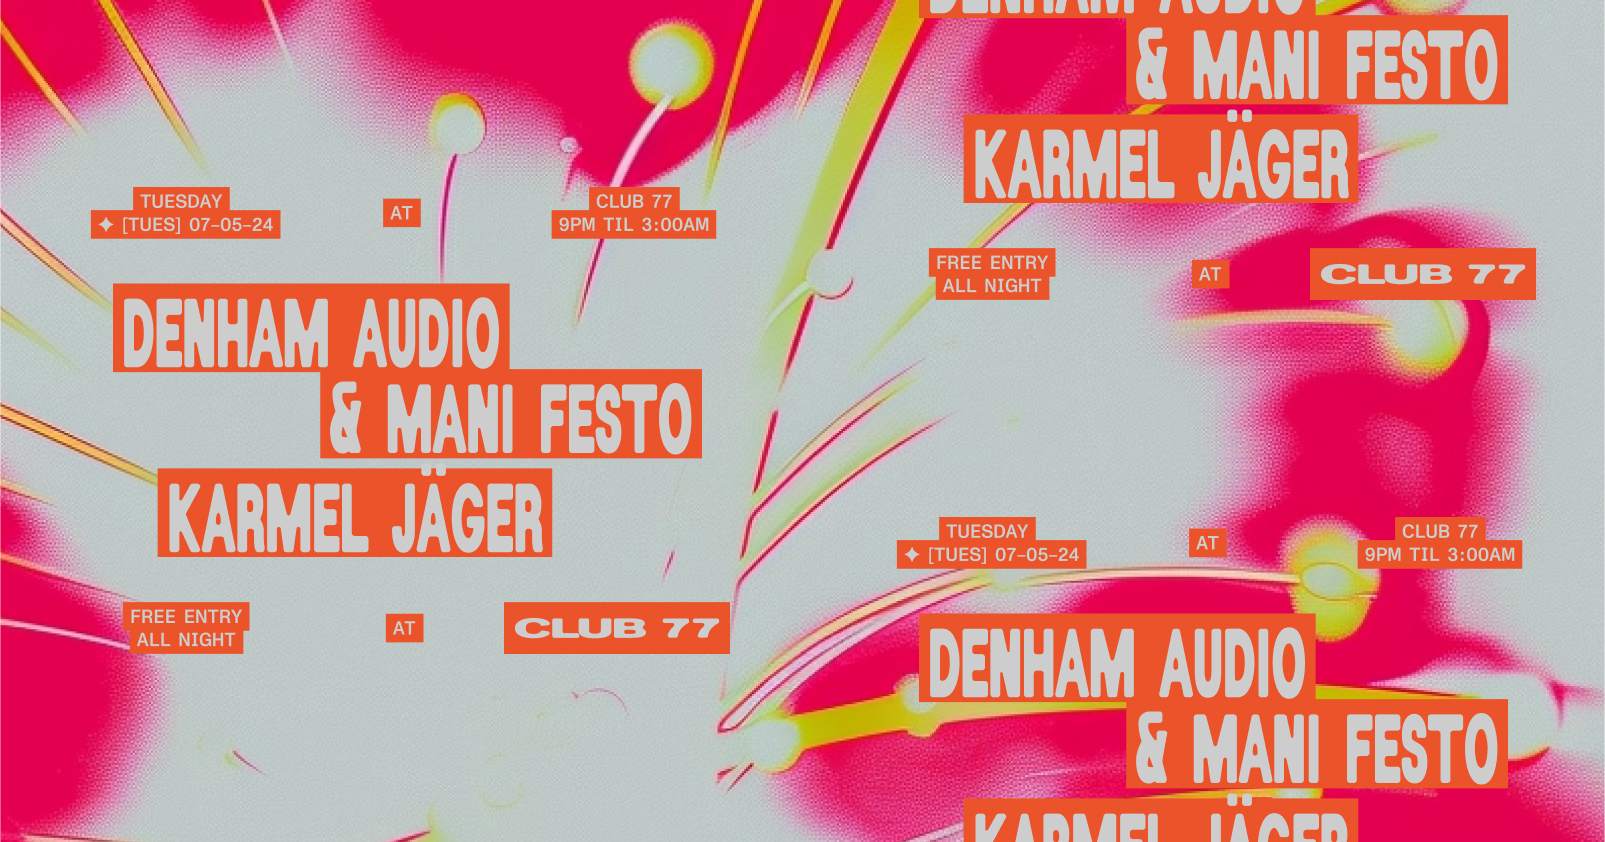 Club 77: Denham Audio & Mani Festo, Karmel Jäger - フライヤー表